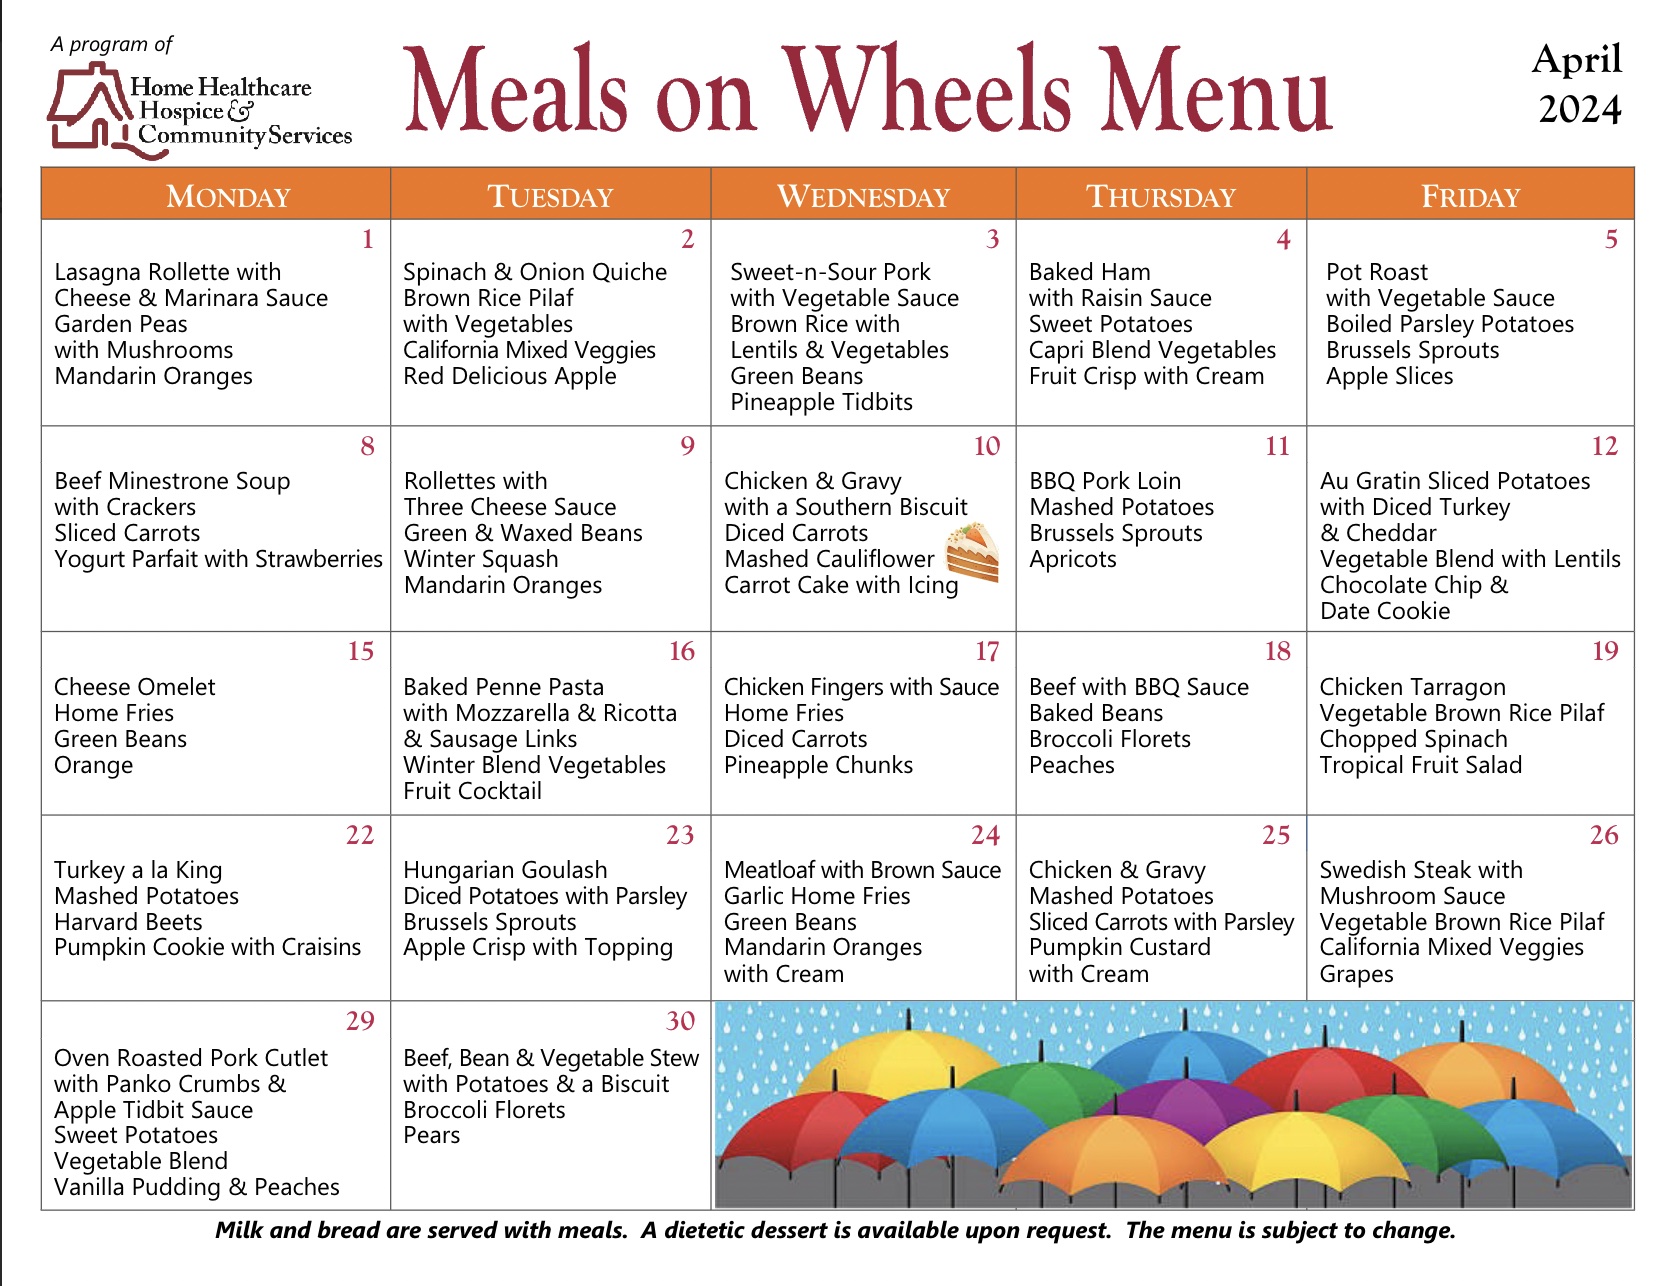 Meals On Wheels Menu for April 2024